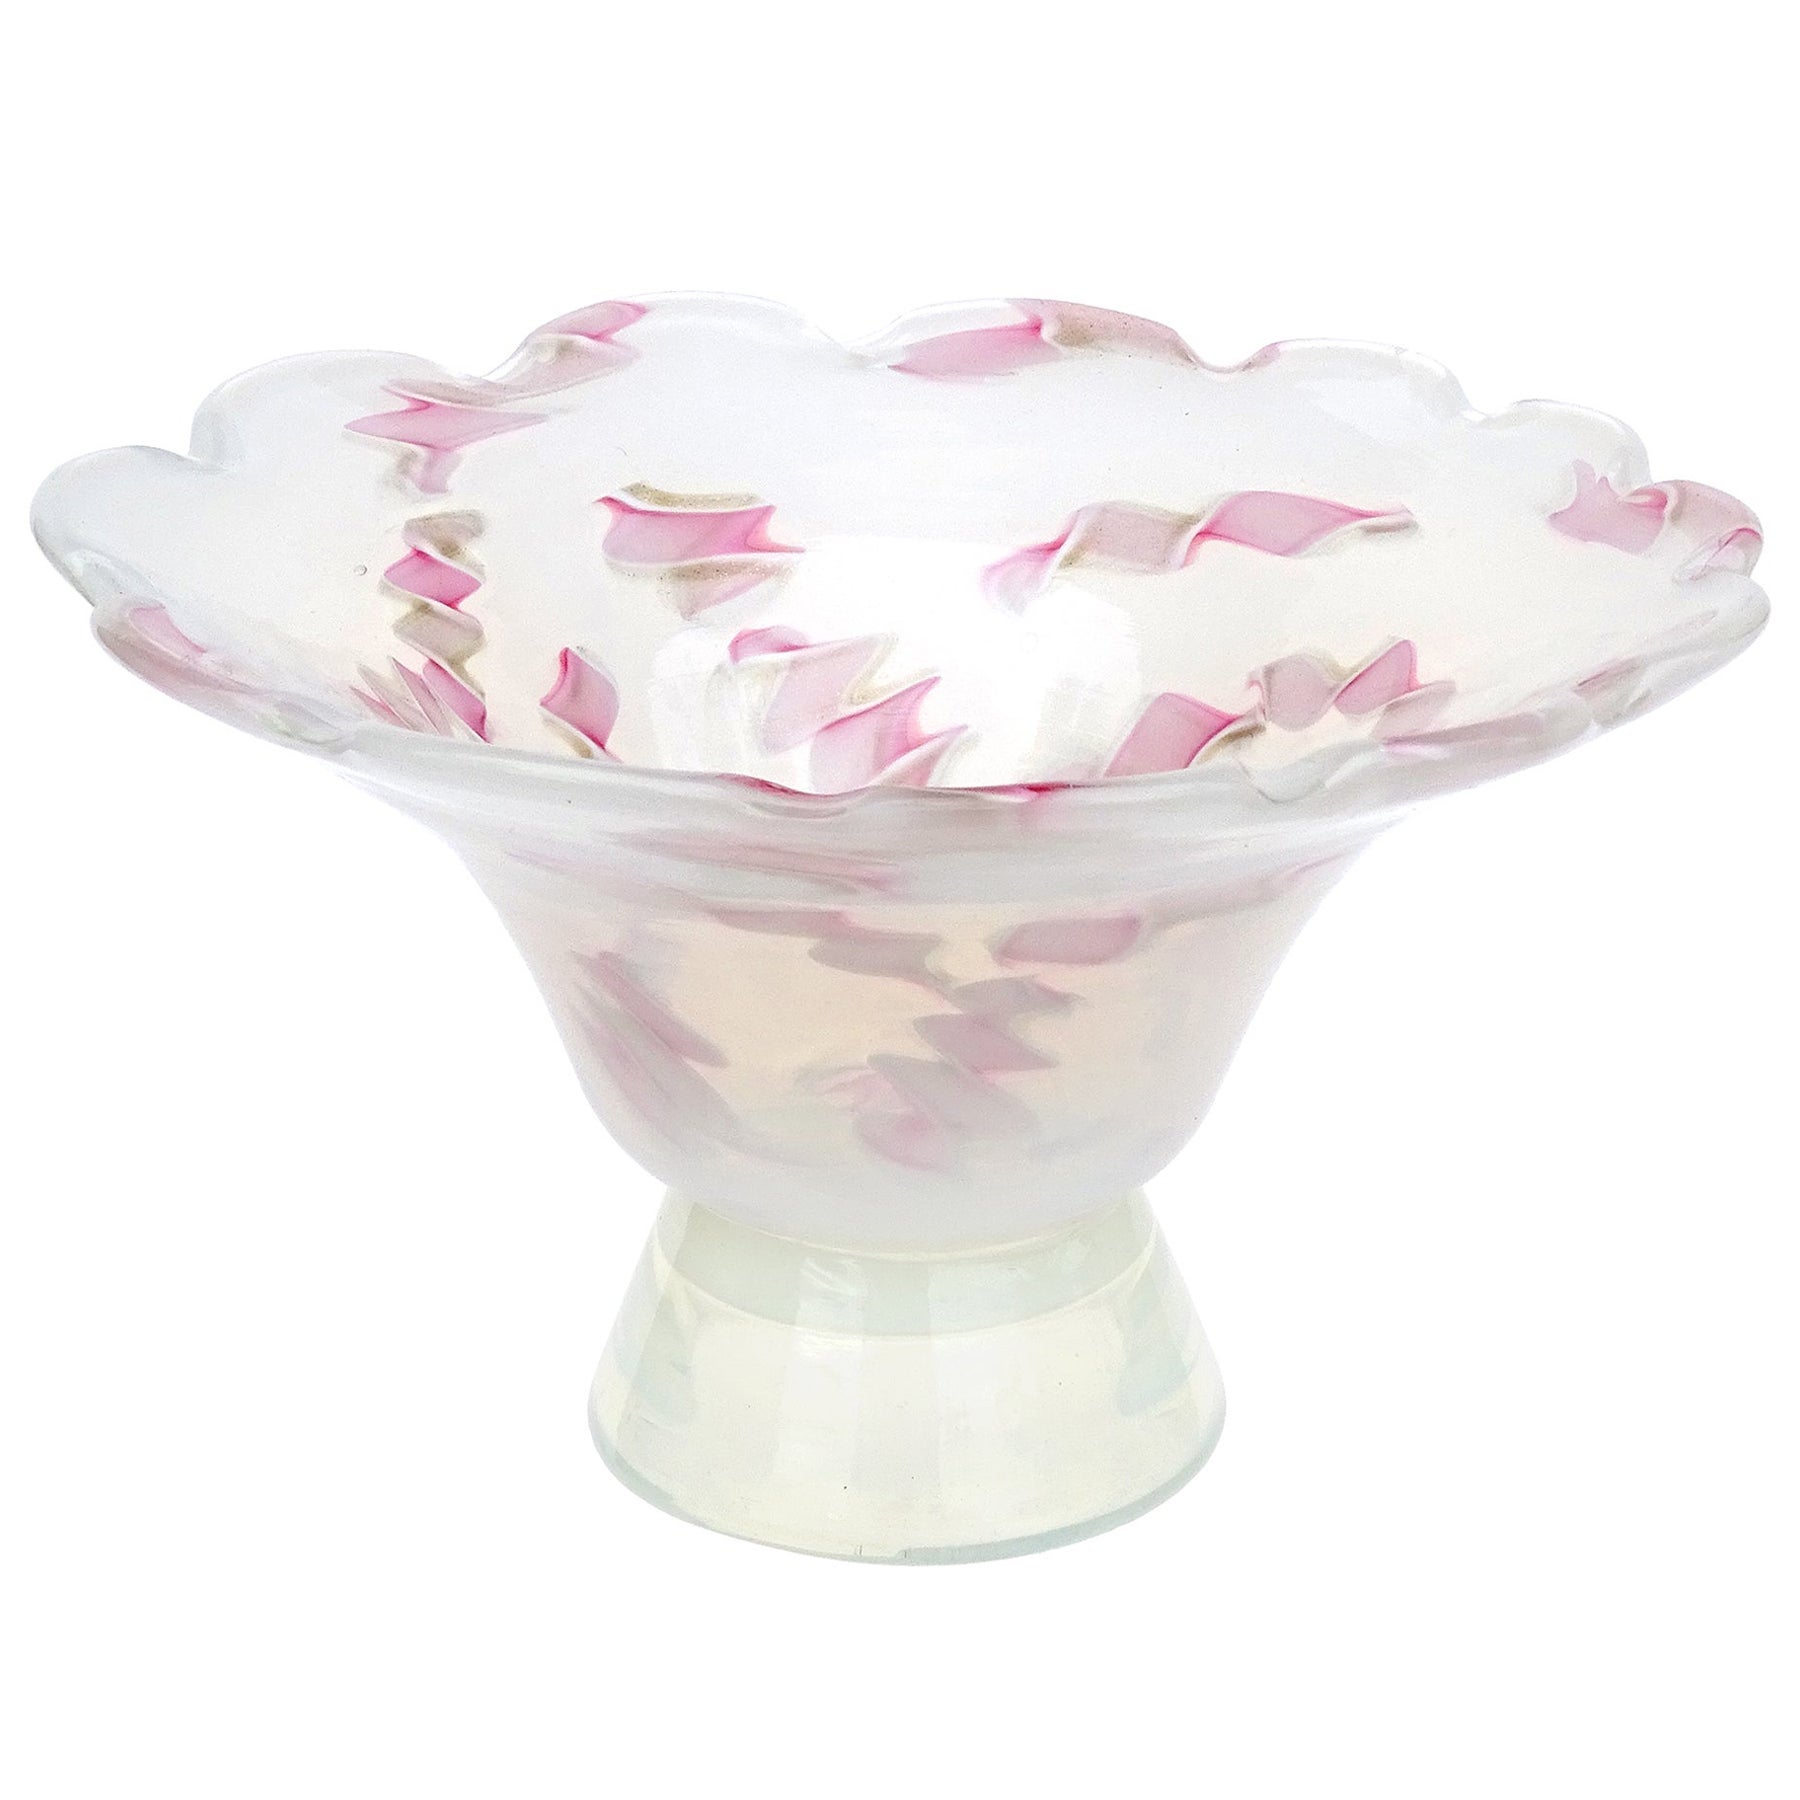 Fratelli Toso Murano Opalescent Pink Aventurine Ribbons Italian Art Glass Bowl